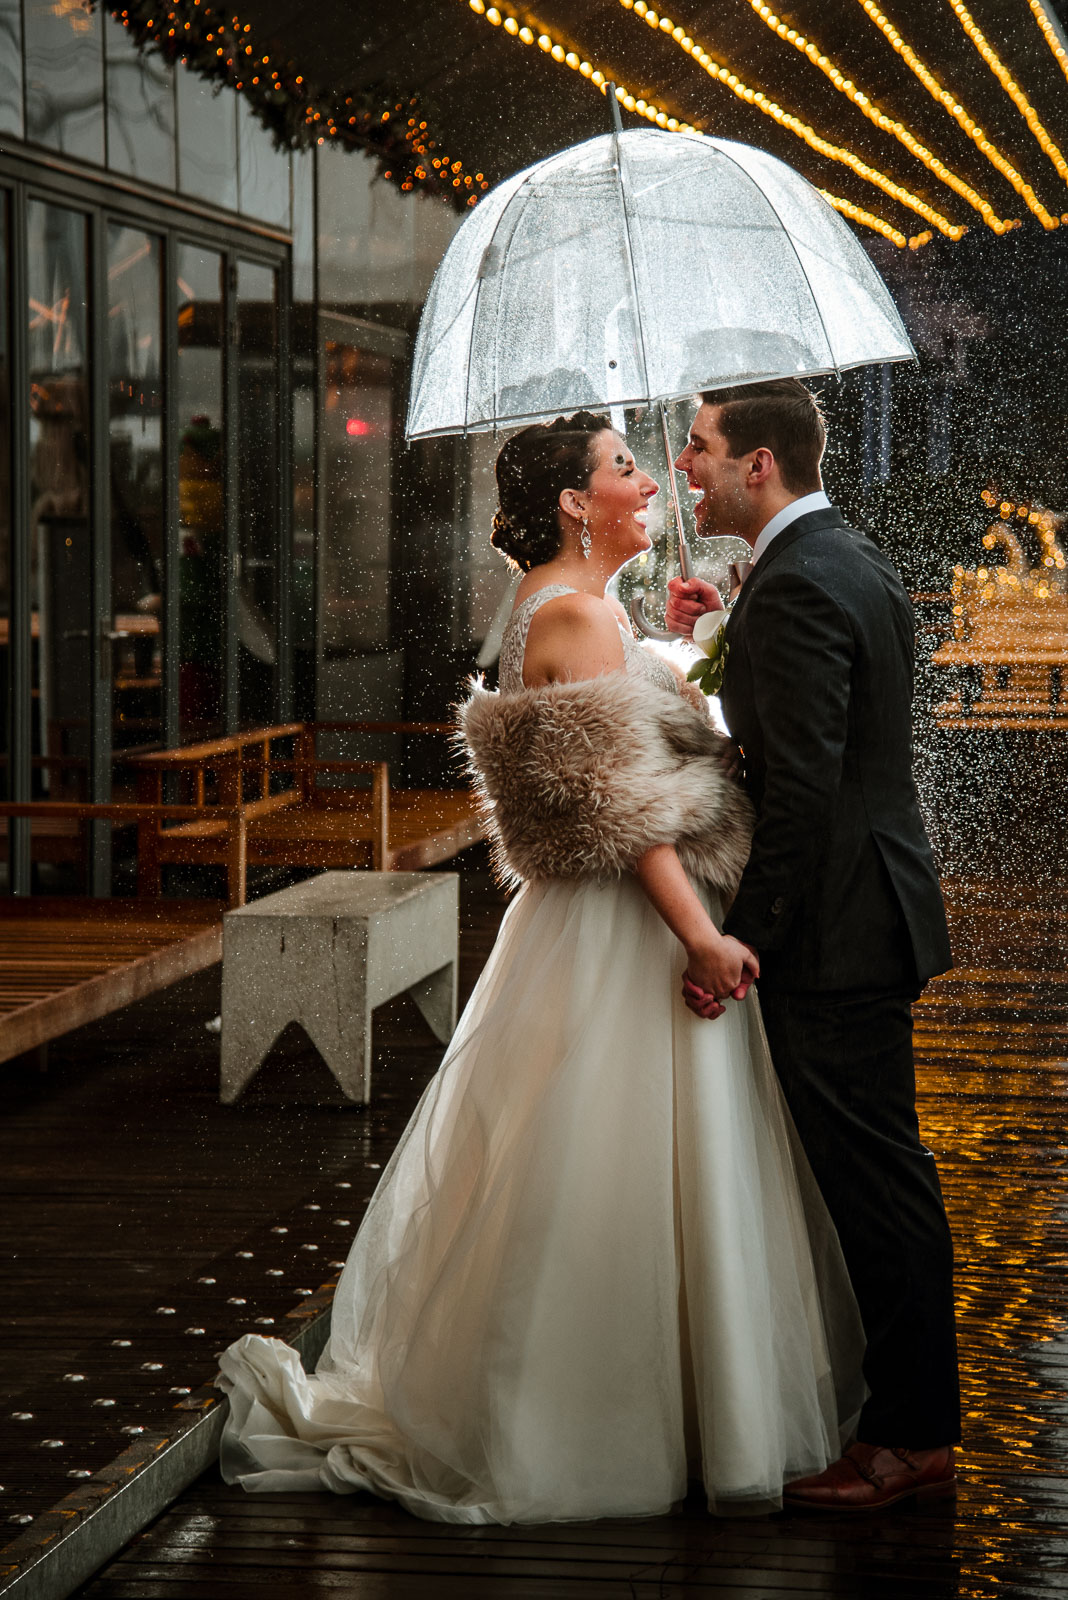 Bride and groom portrait in the rain with umbrella